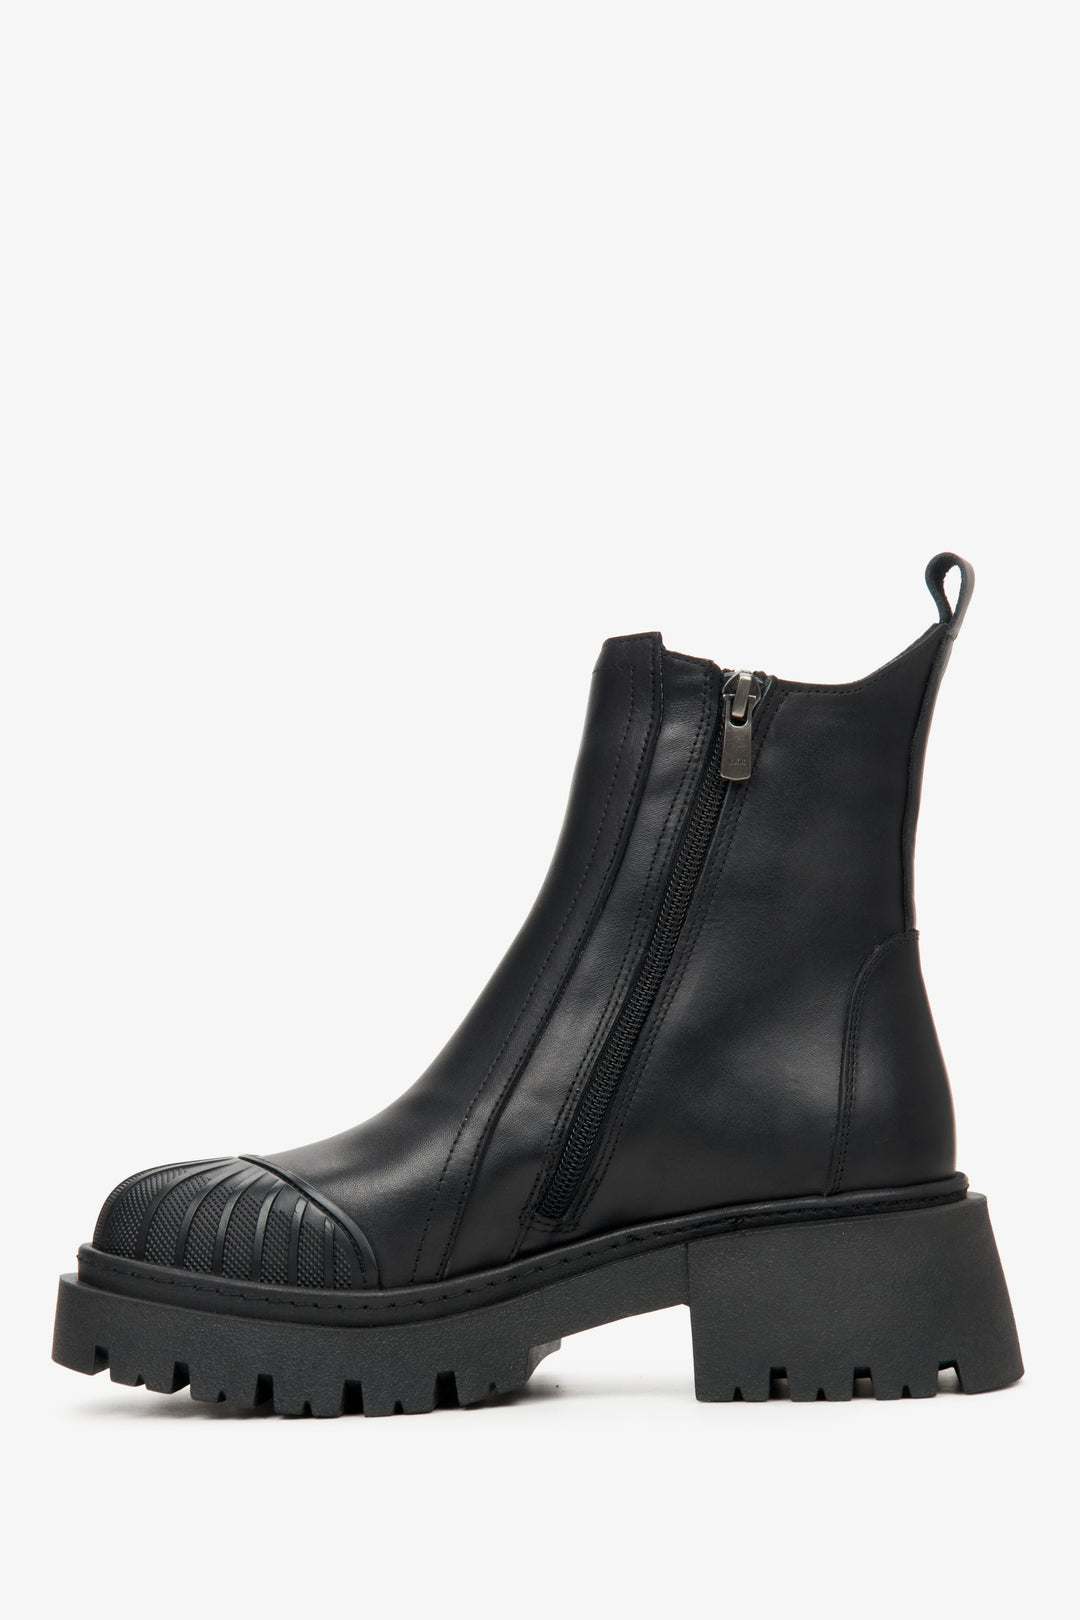 Leather black women's ankle boots by Estro with a flexible platform - shoe profile.